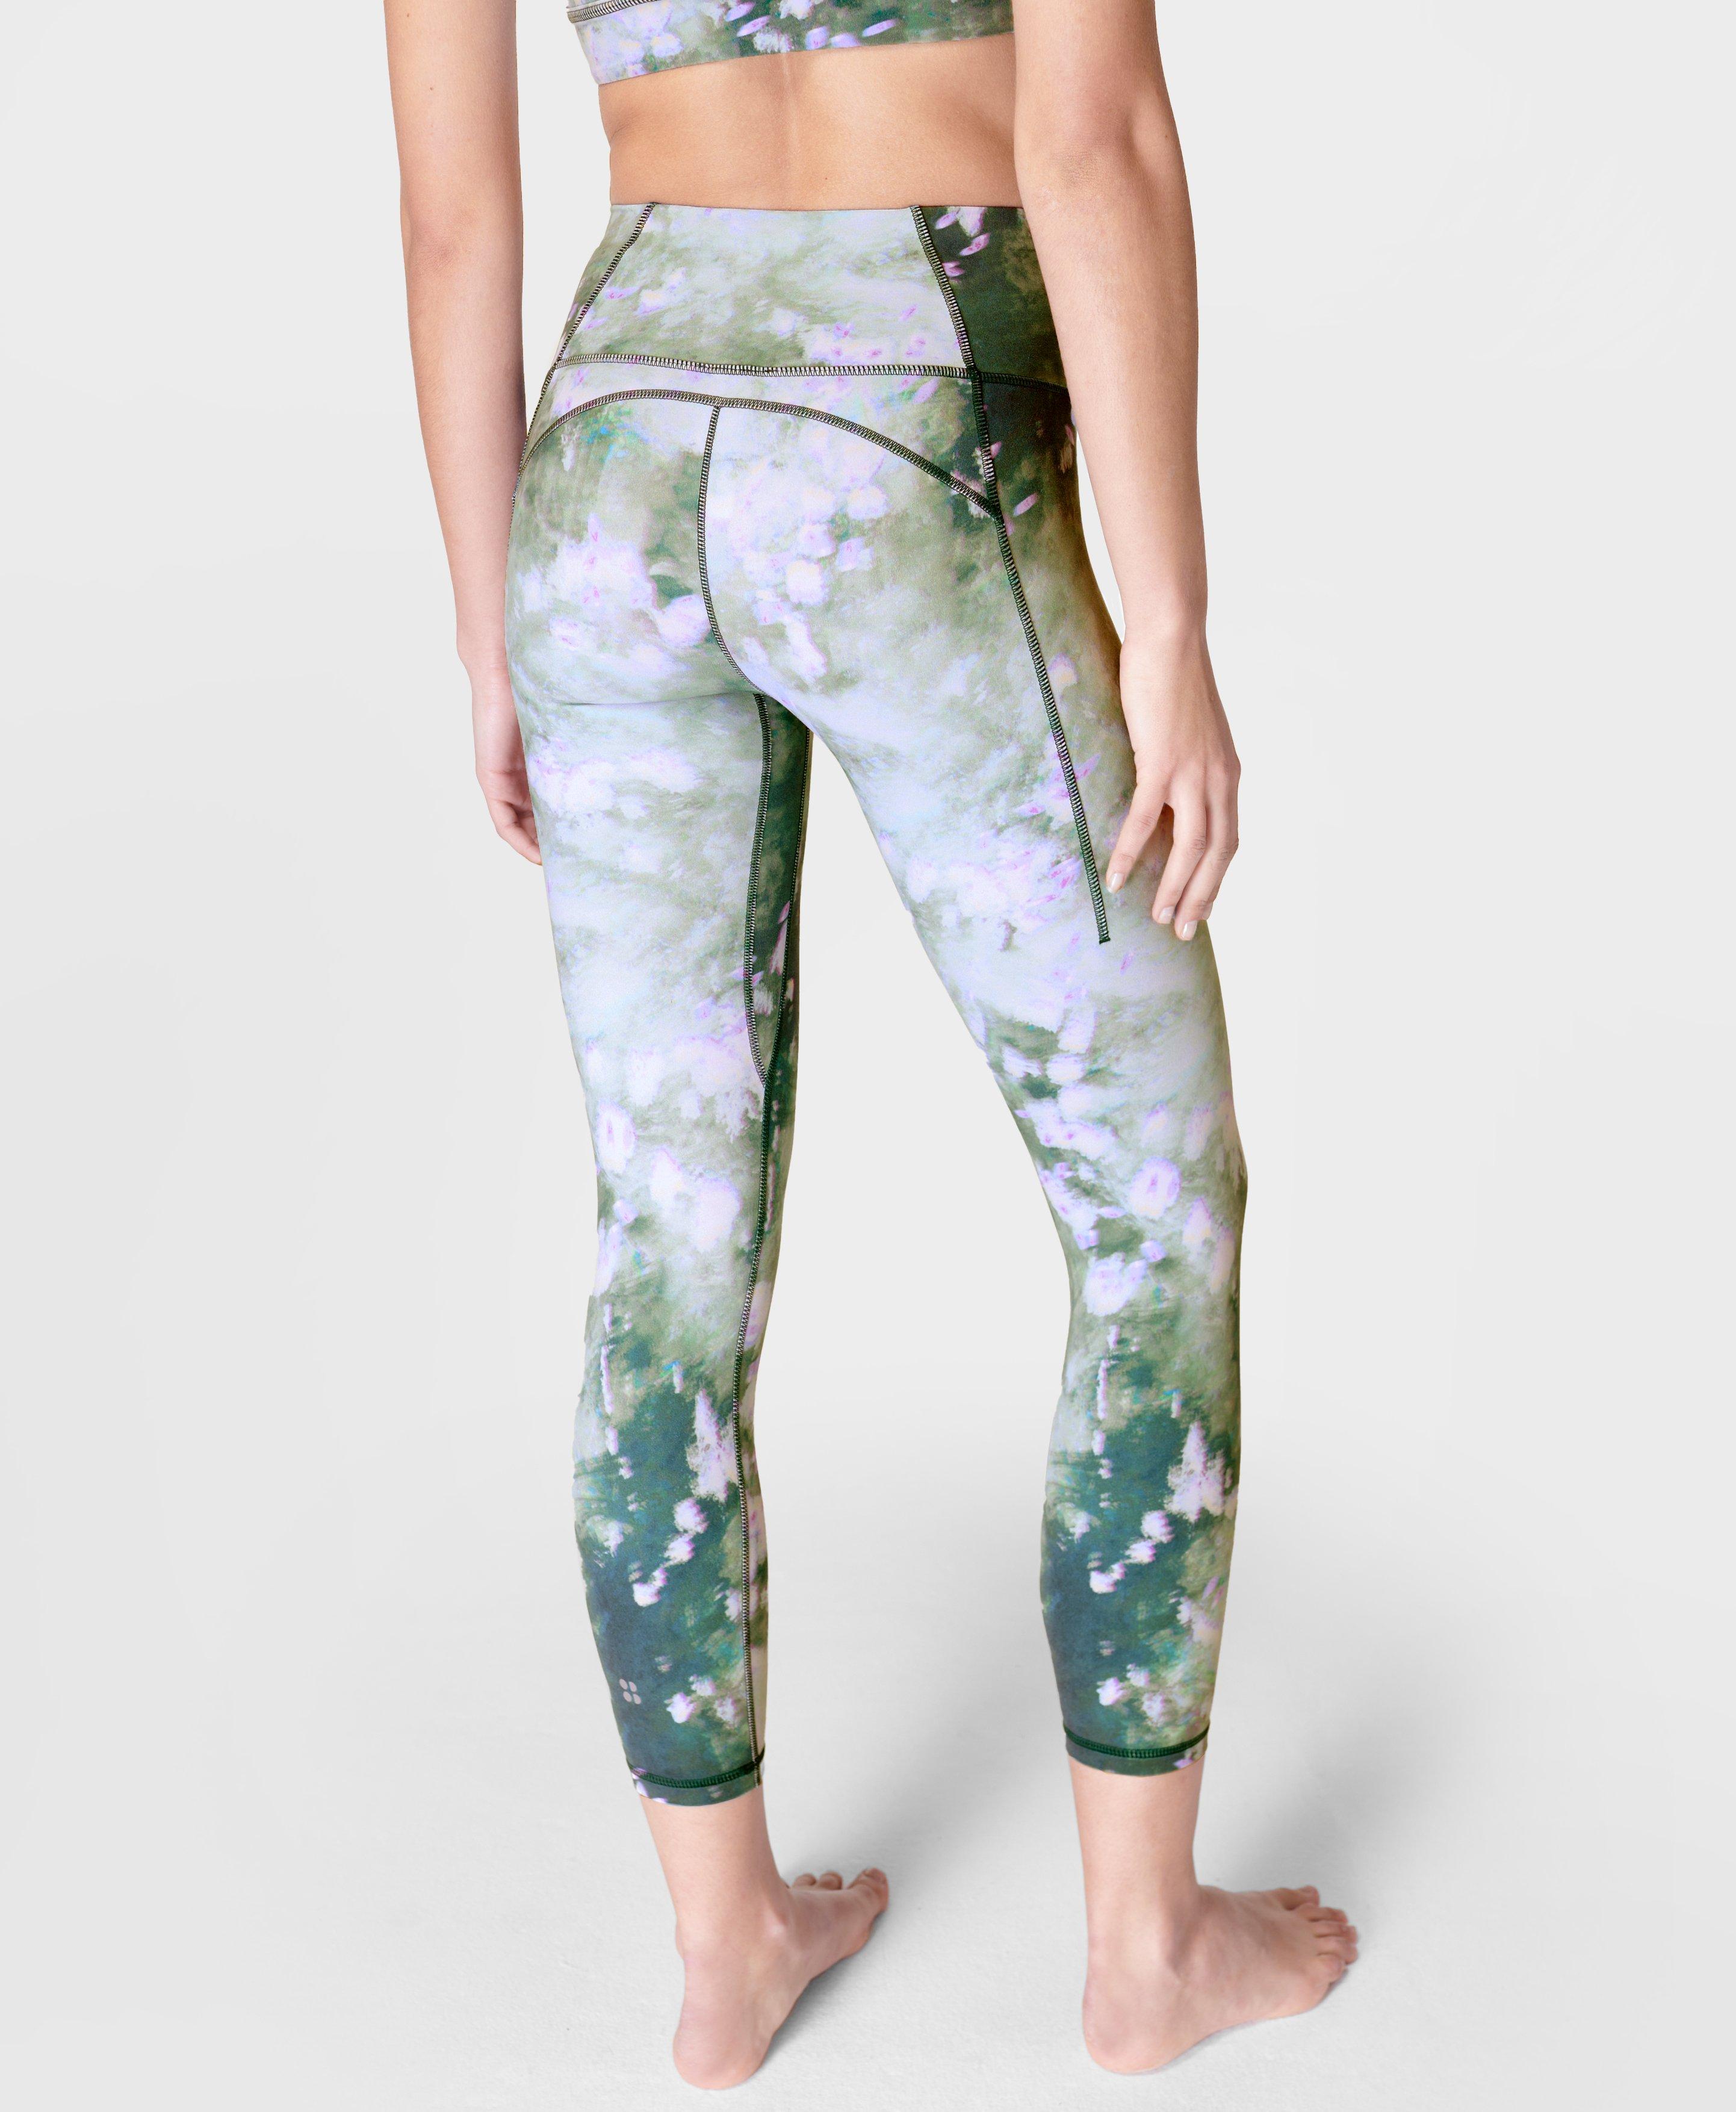 Super Soft 7/8 Yoga Leggings - Green Lavender Meadow Print